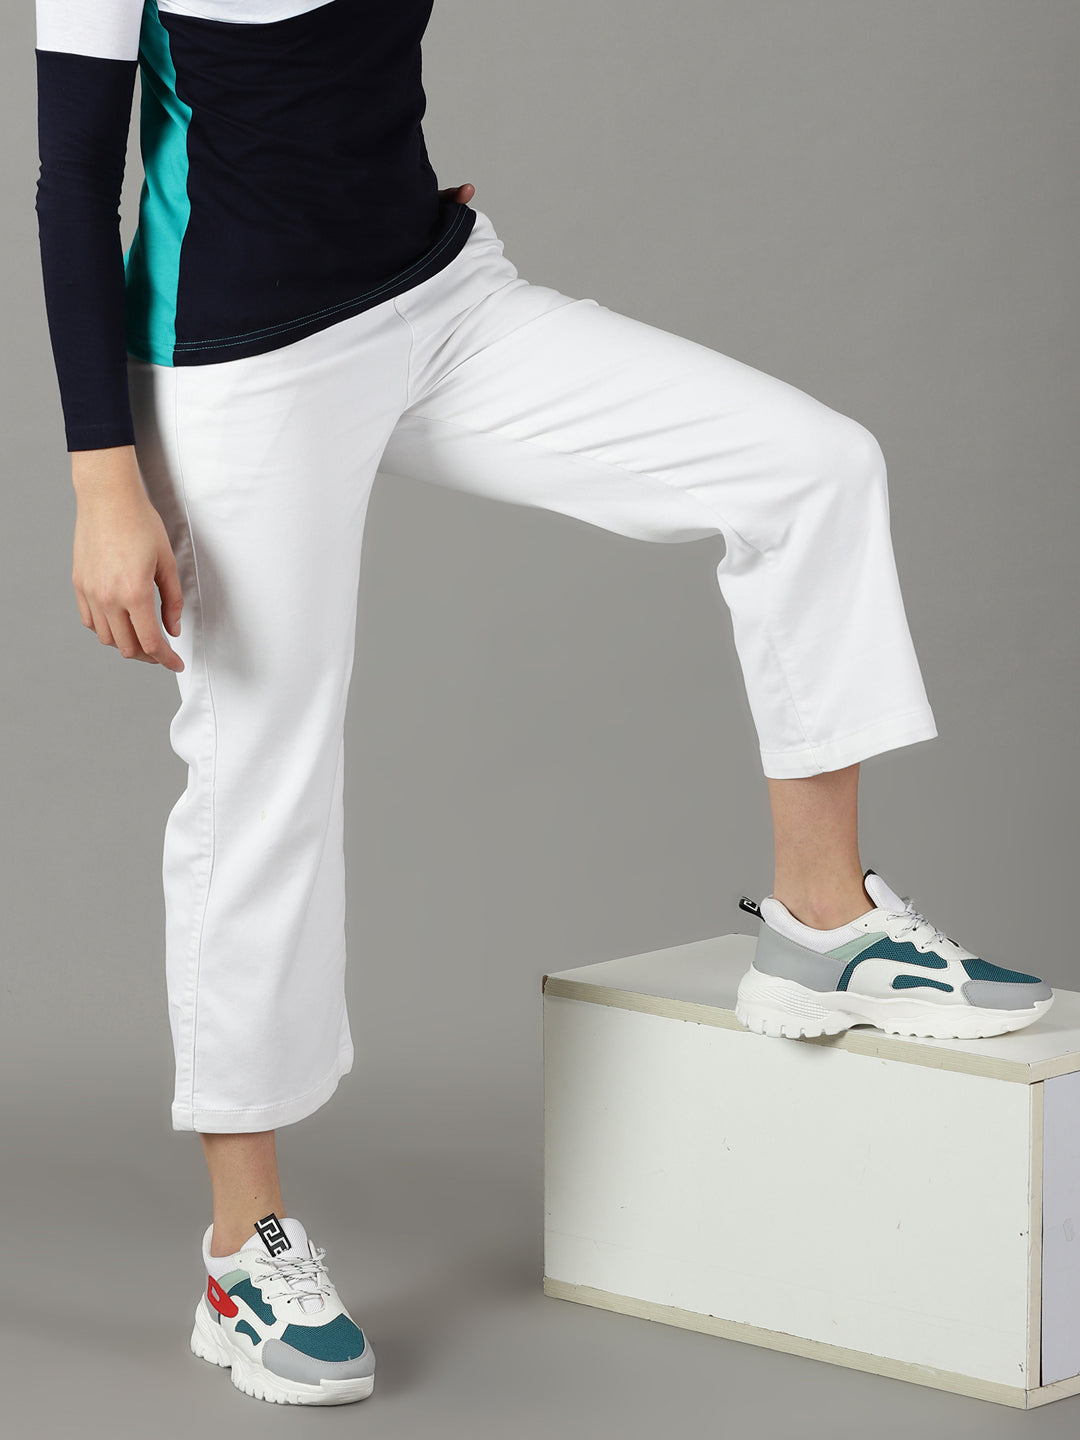 Women's White Solid Slim Fit Denim Jeans